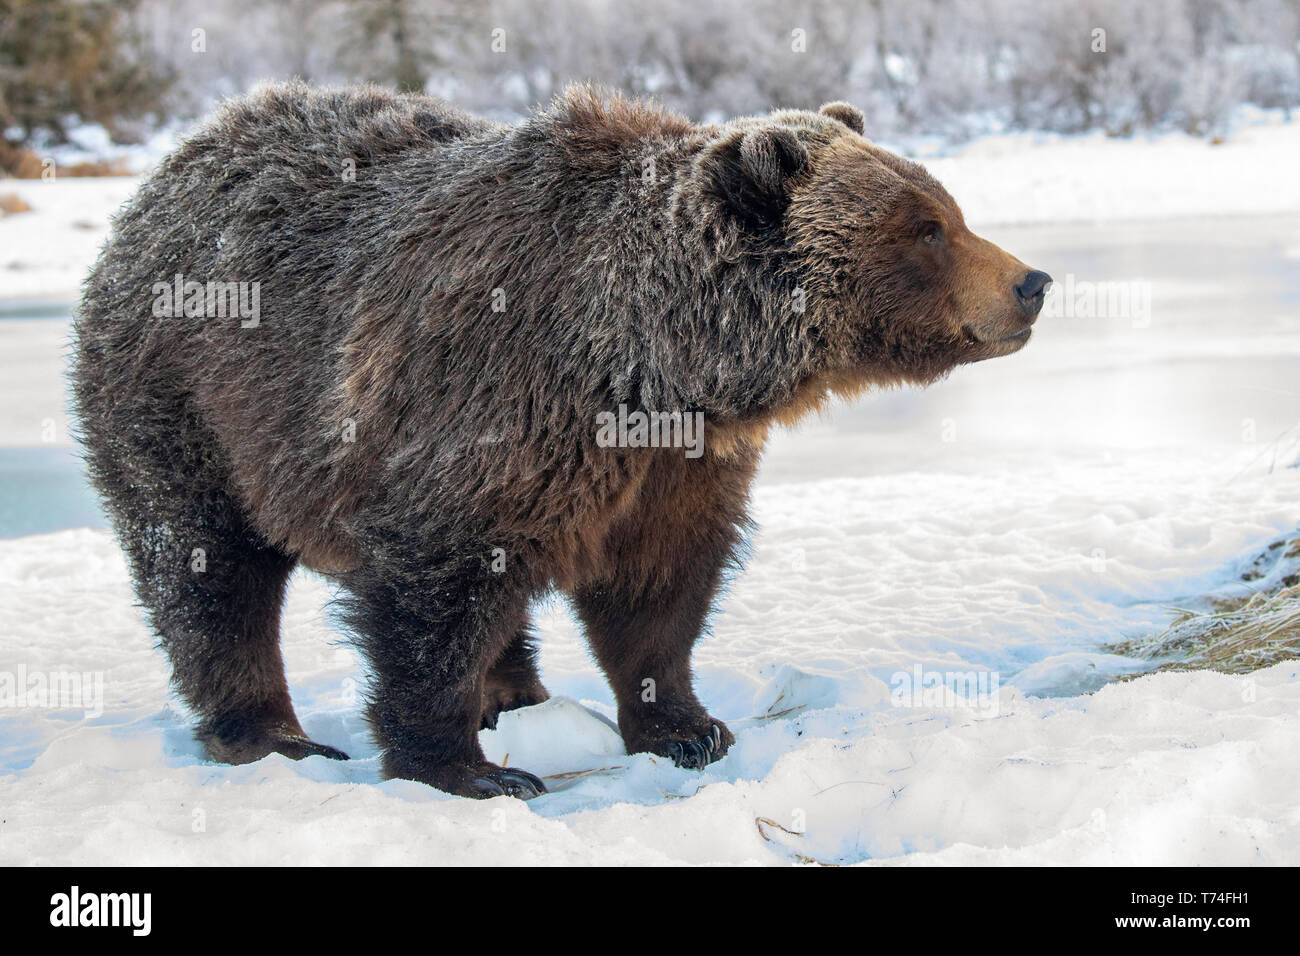 Captive female Grizzly bear (Ursus arctos horribilis) standing on snow, Alaska, Wildlife Conservation Center, South-central Alaska Stock Photo